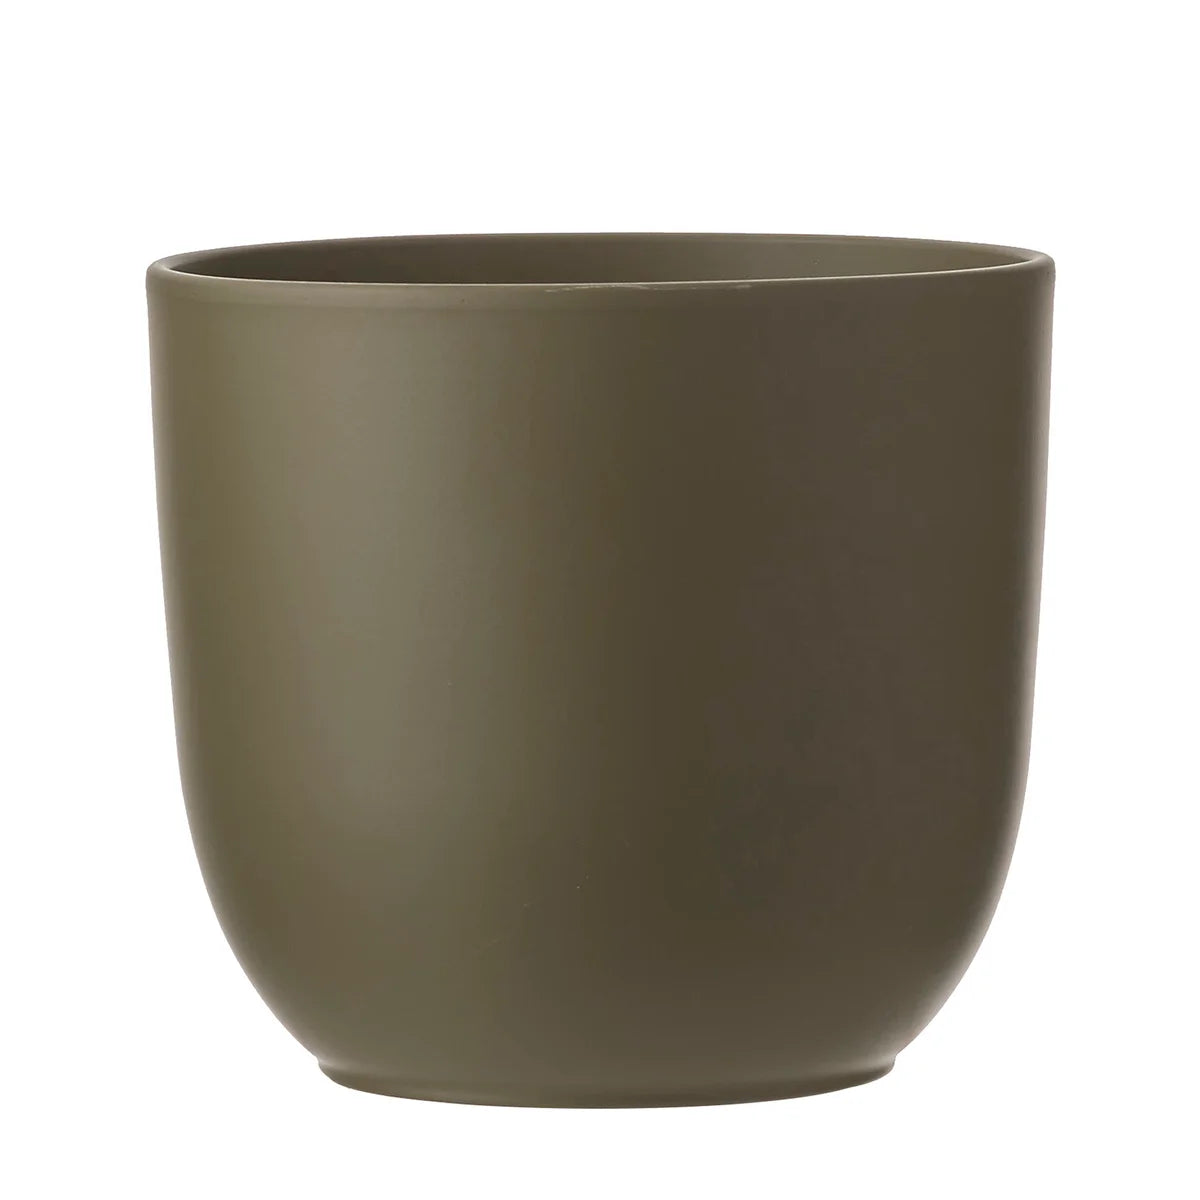 Pot Tusca pot round green - 12.25x11.25"  22387